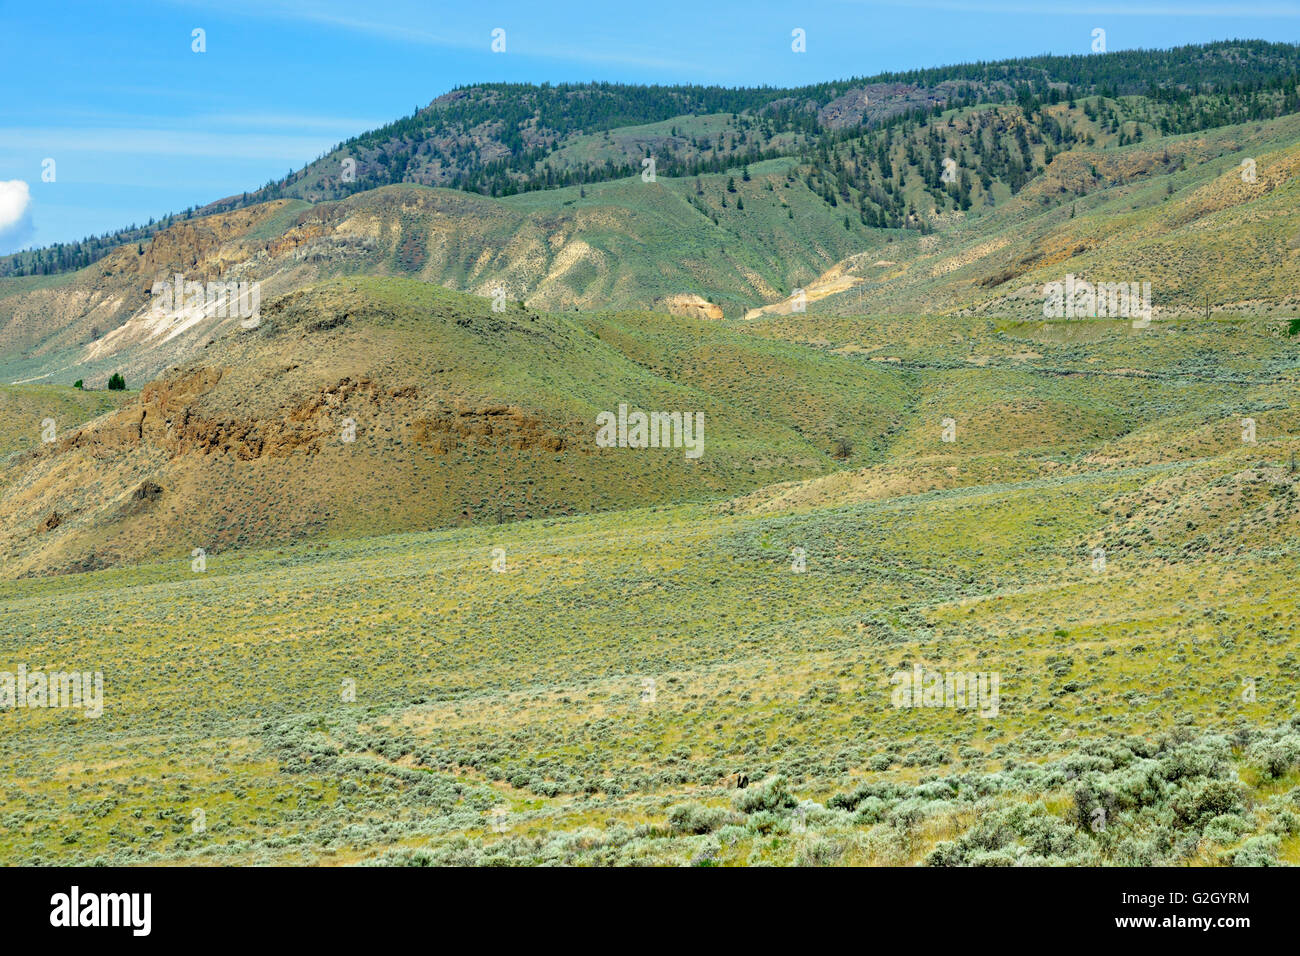 Arid landscape of the Interior British Columbia Canada Stock Photo